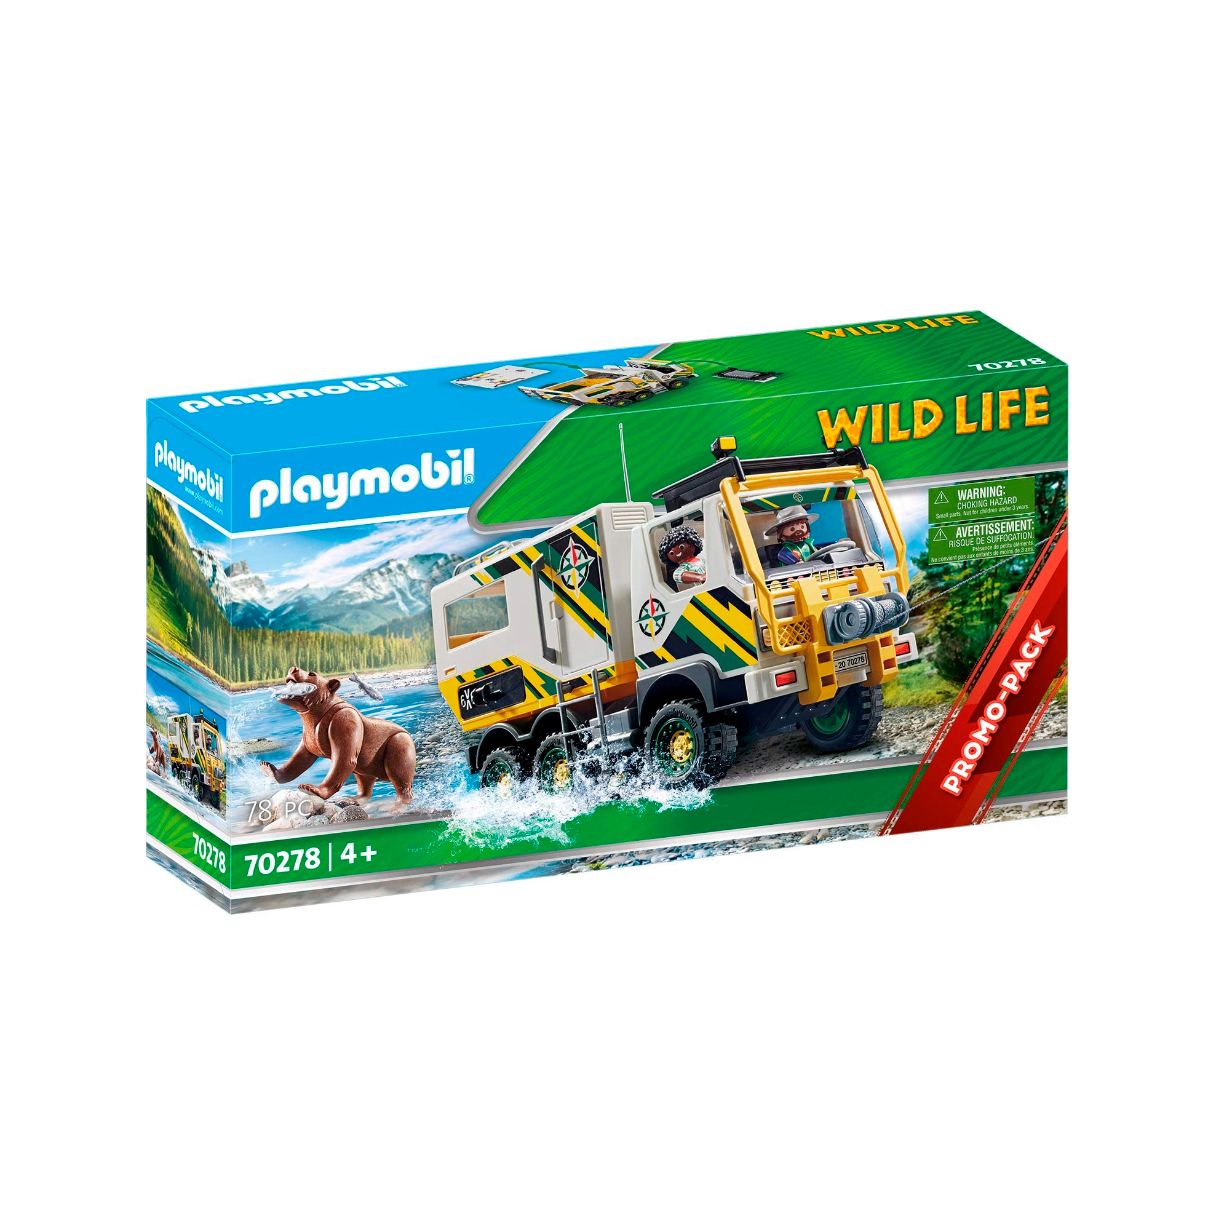 playmobil wild life camion de aventuras (70278)